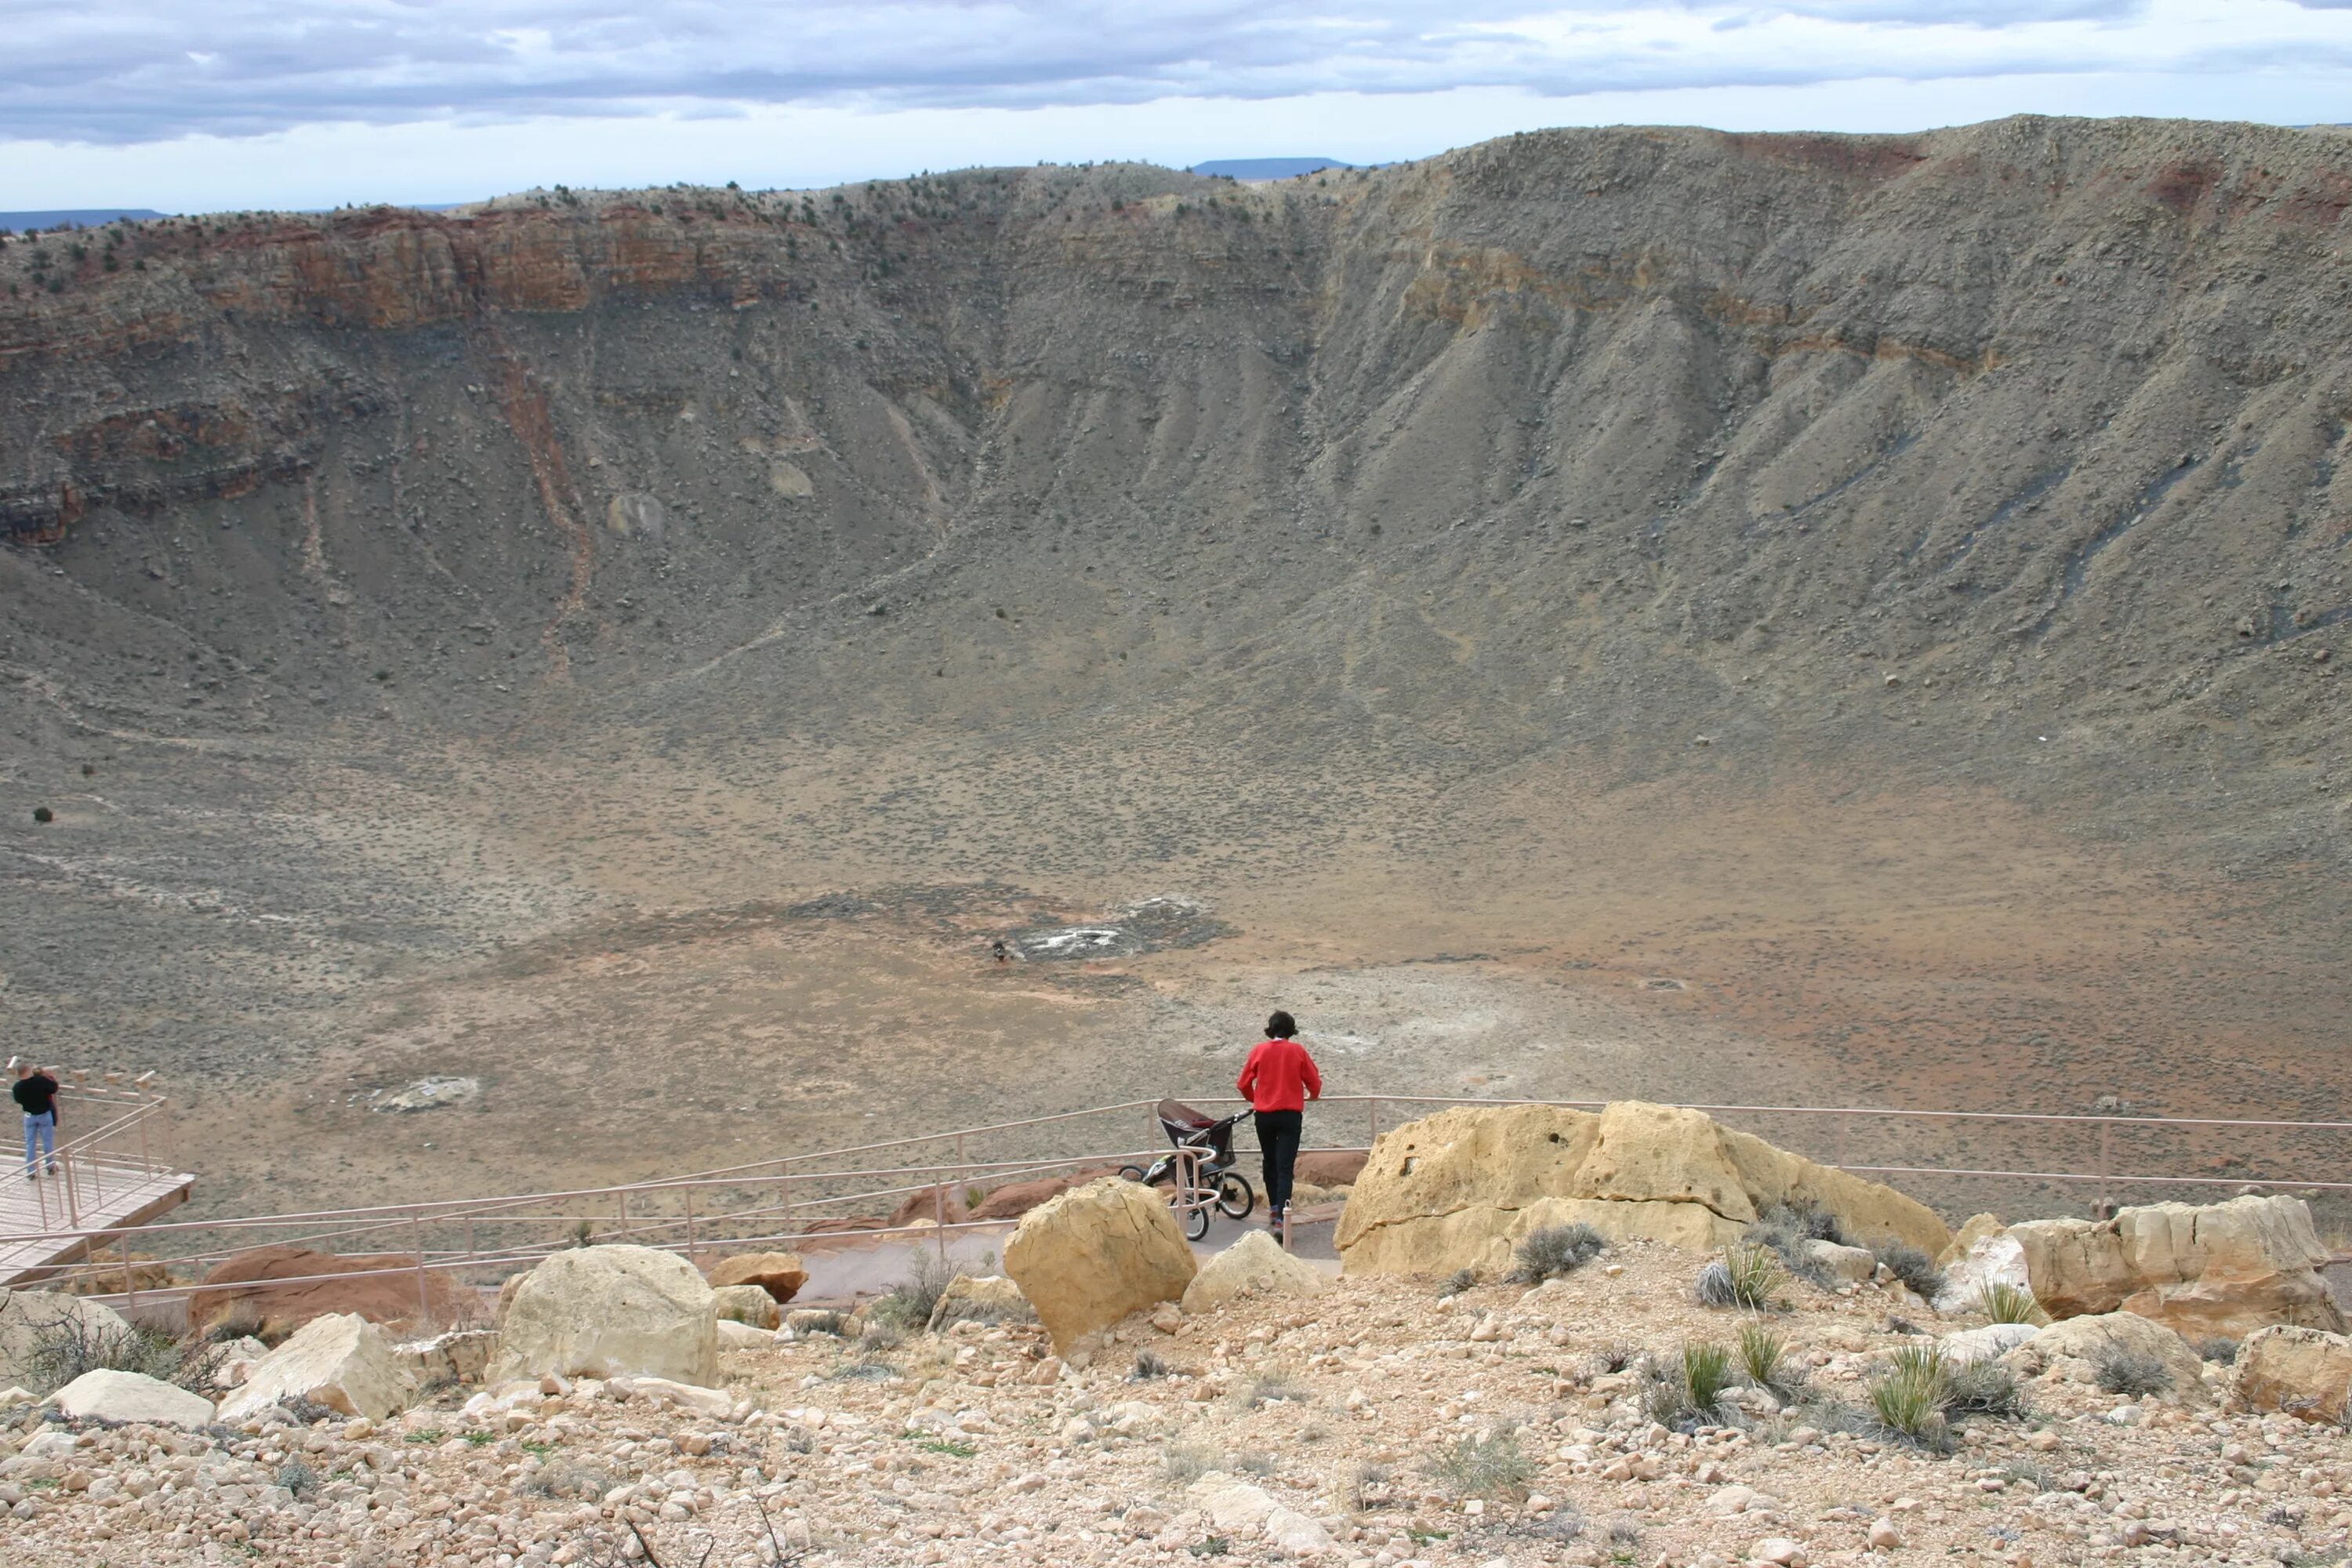 Самый крупный кратер на земле. Метеоритный кратер Бэрринджер-Метеор-Крейтер. Метеоритный кратер в Аризоне. Кратер Бэррингера Аризона. Метеоритный кратер Бэррингера Аризона.